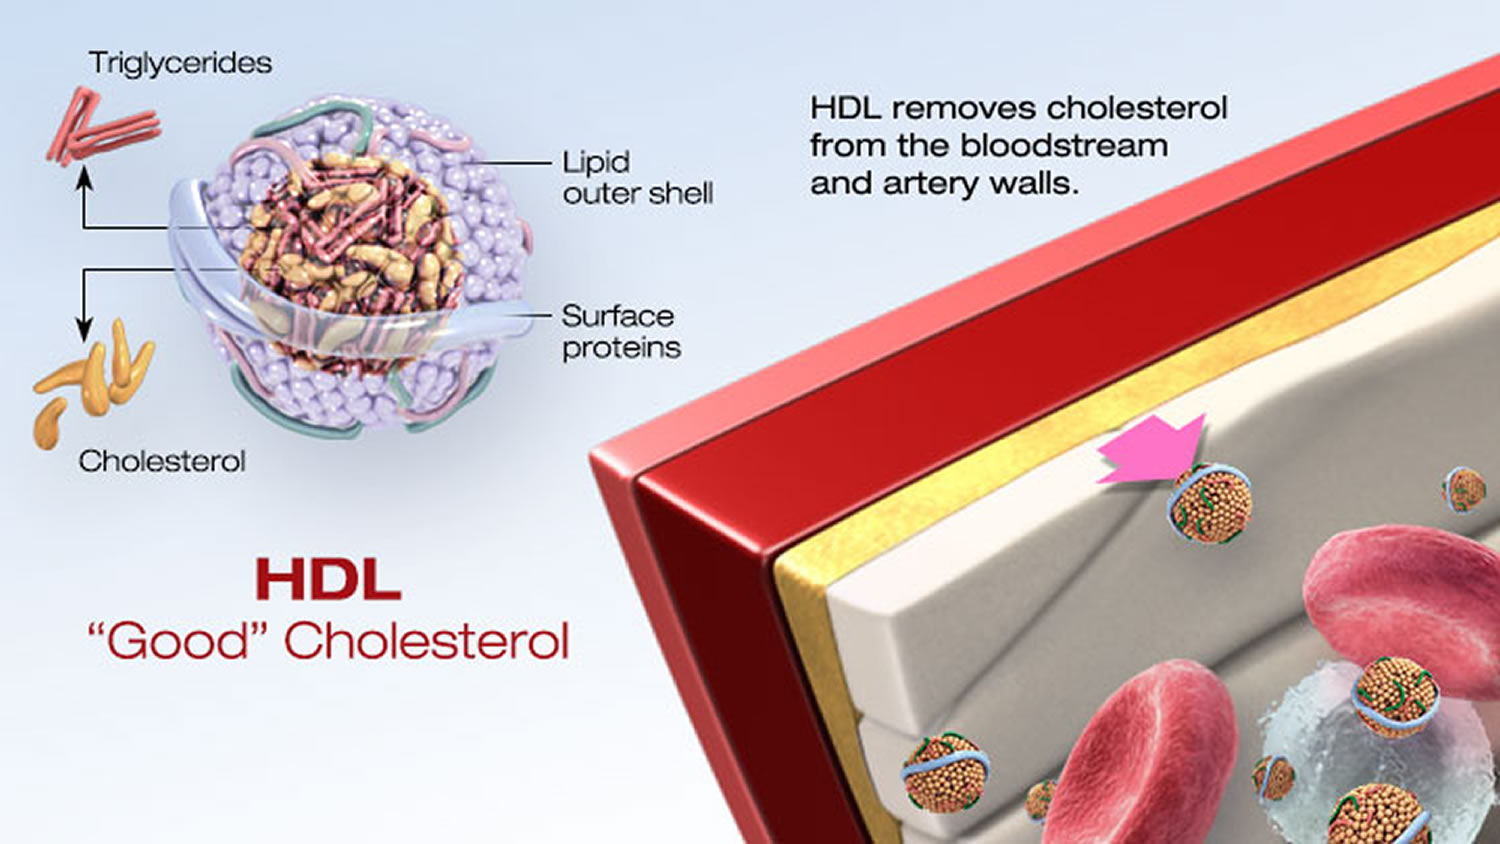 hdl cholesterol